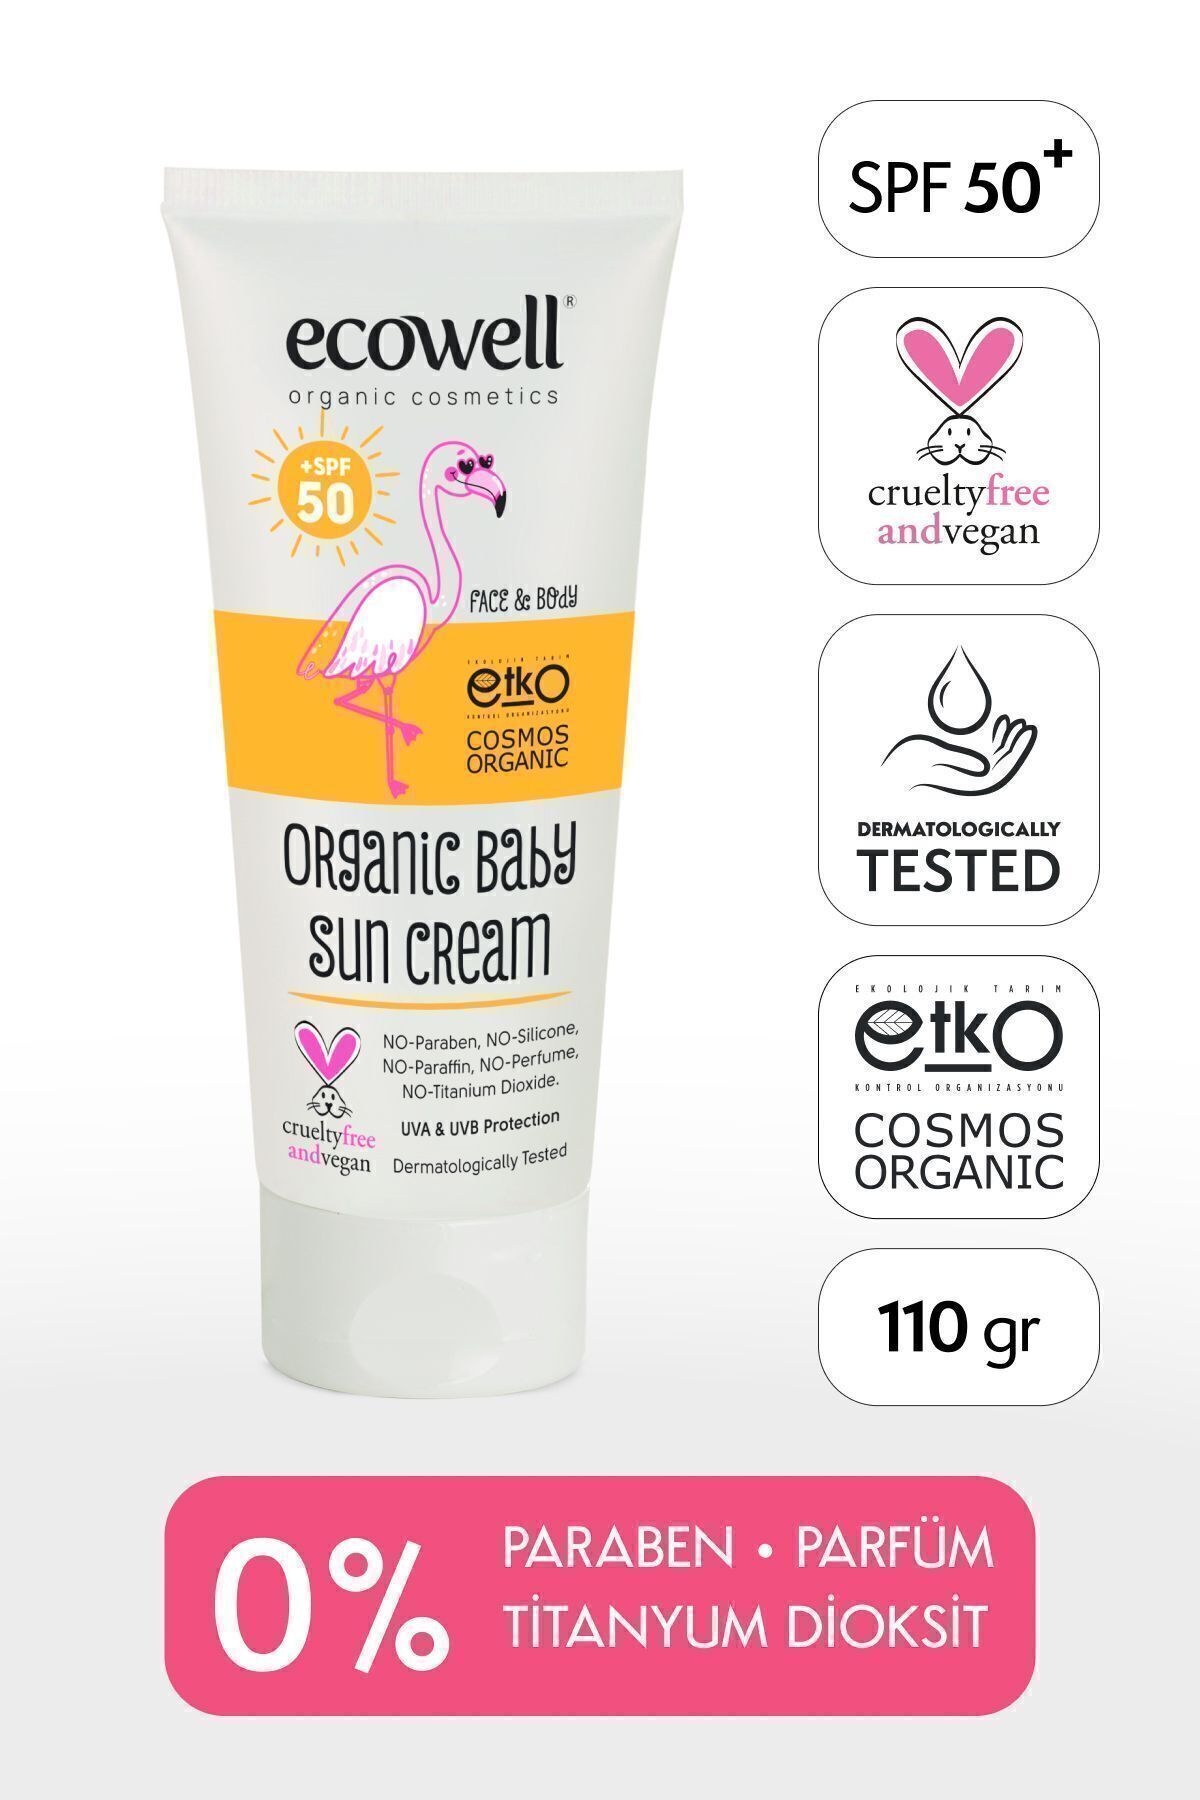 Ecowell Bebek Güneş Kremi Spf 50, Organik & Vegan Sertifikalı, Mineral Filtre, Uva & Uvb Yüksek Koruma 110gr